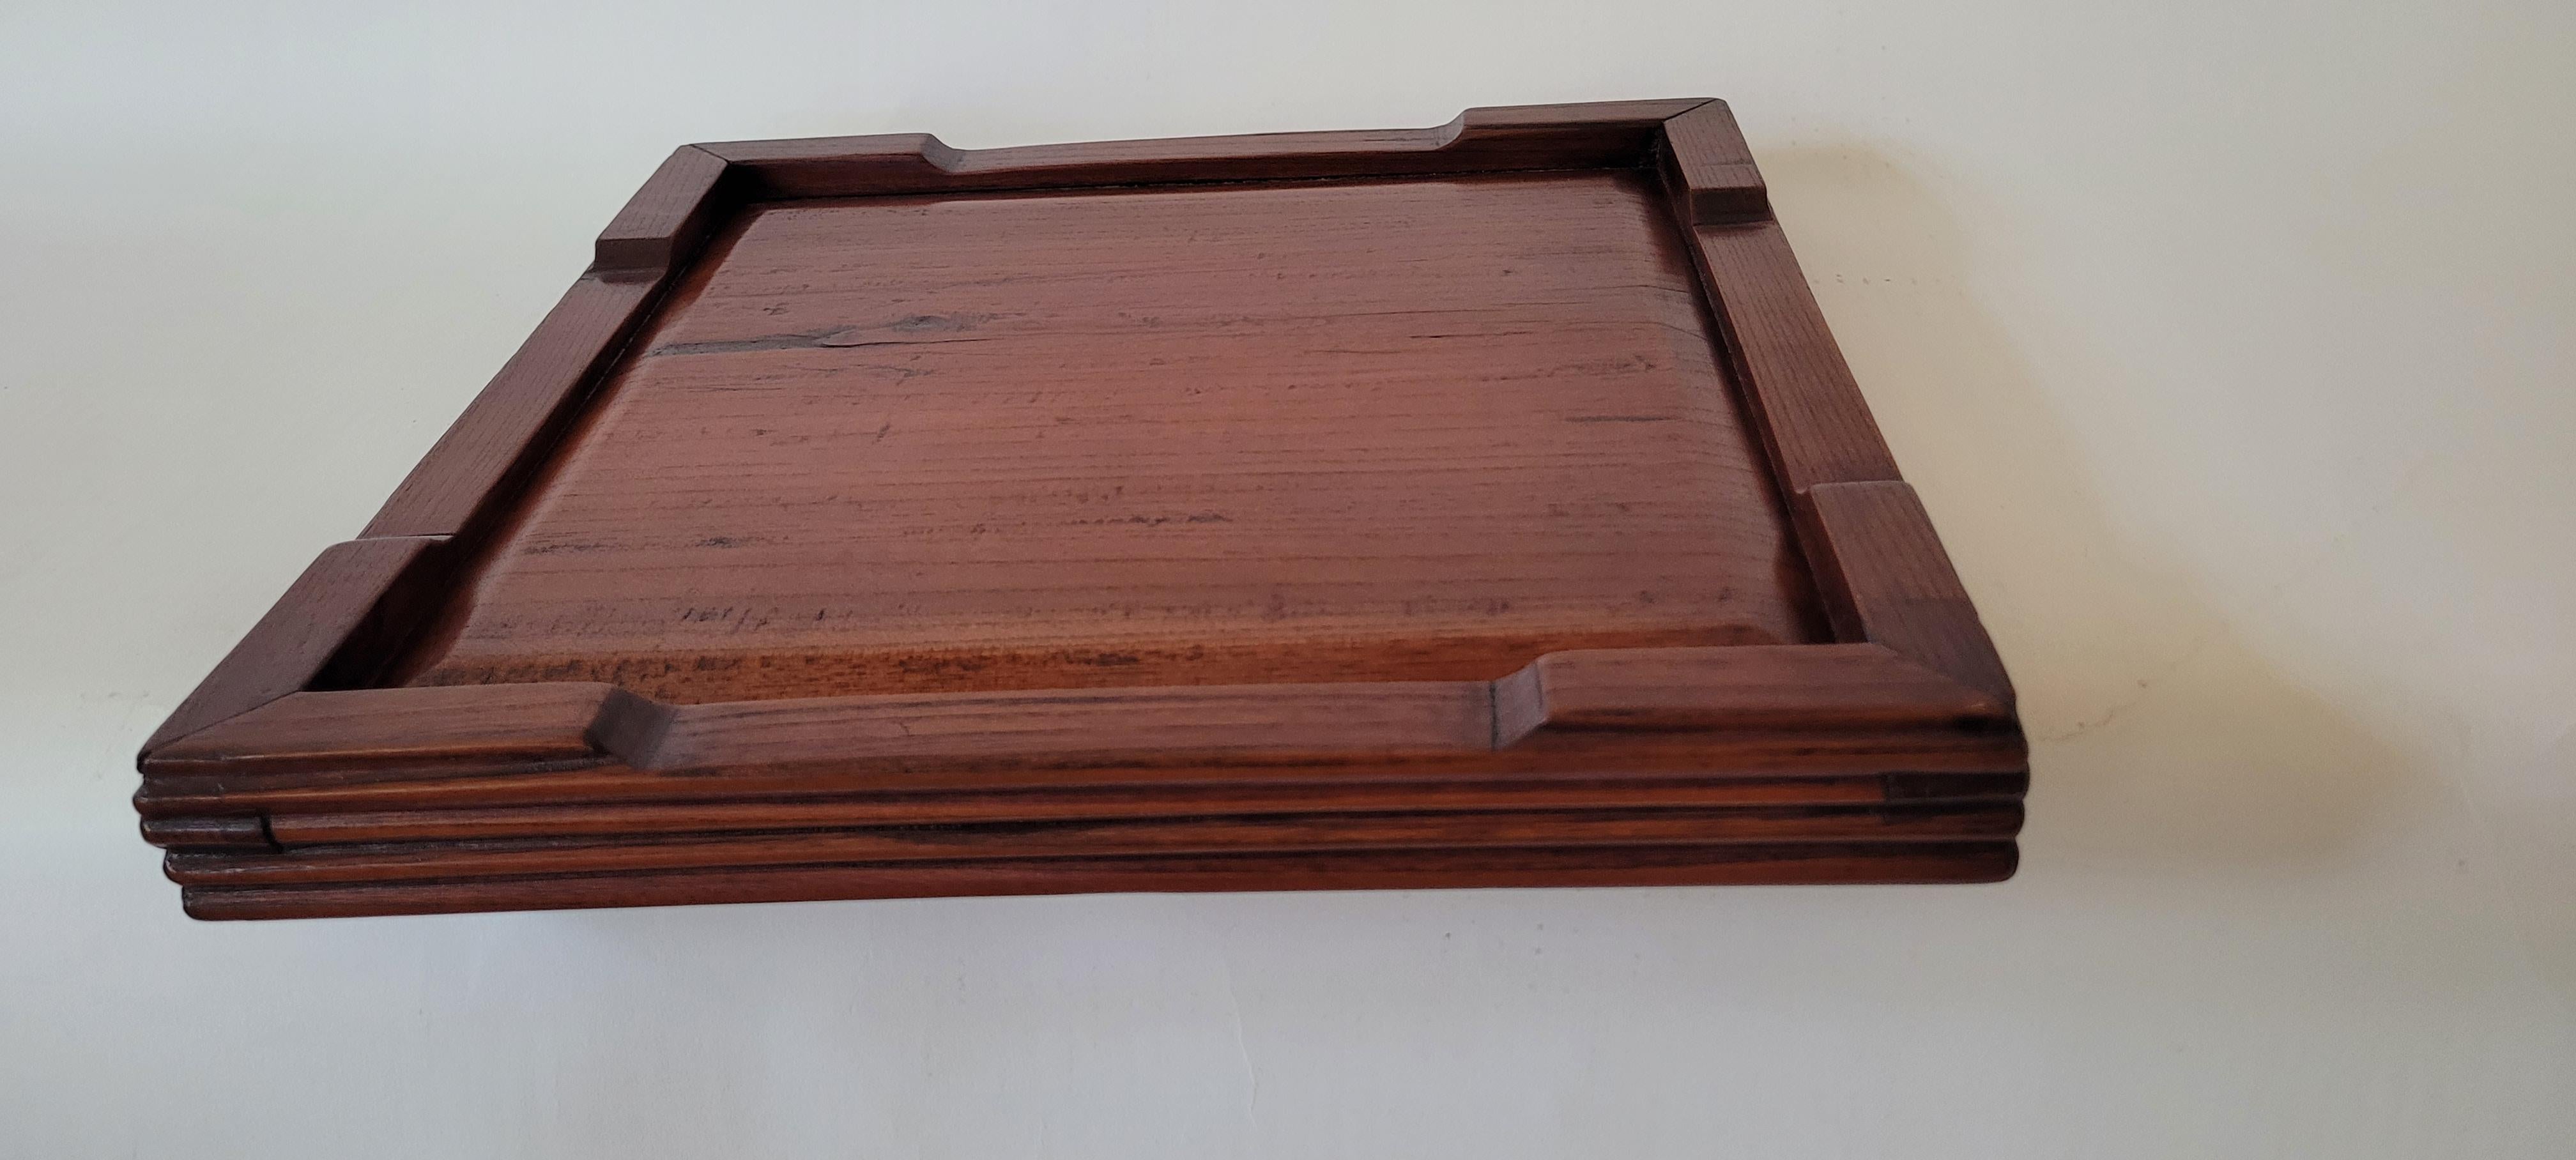 Square Cornered Tea Tray - Late 19th Century  For Sale 2